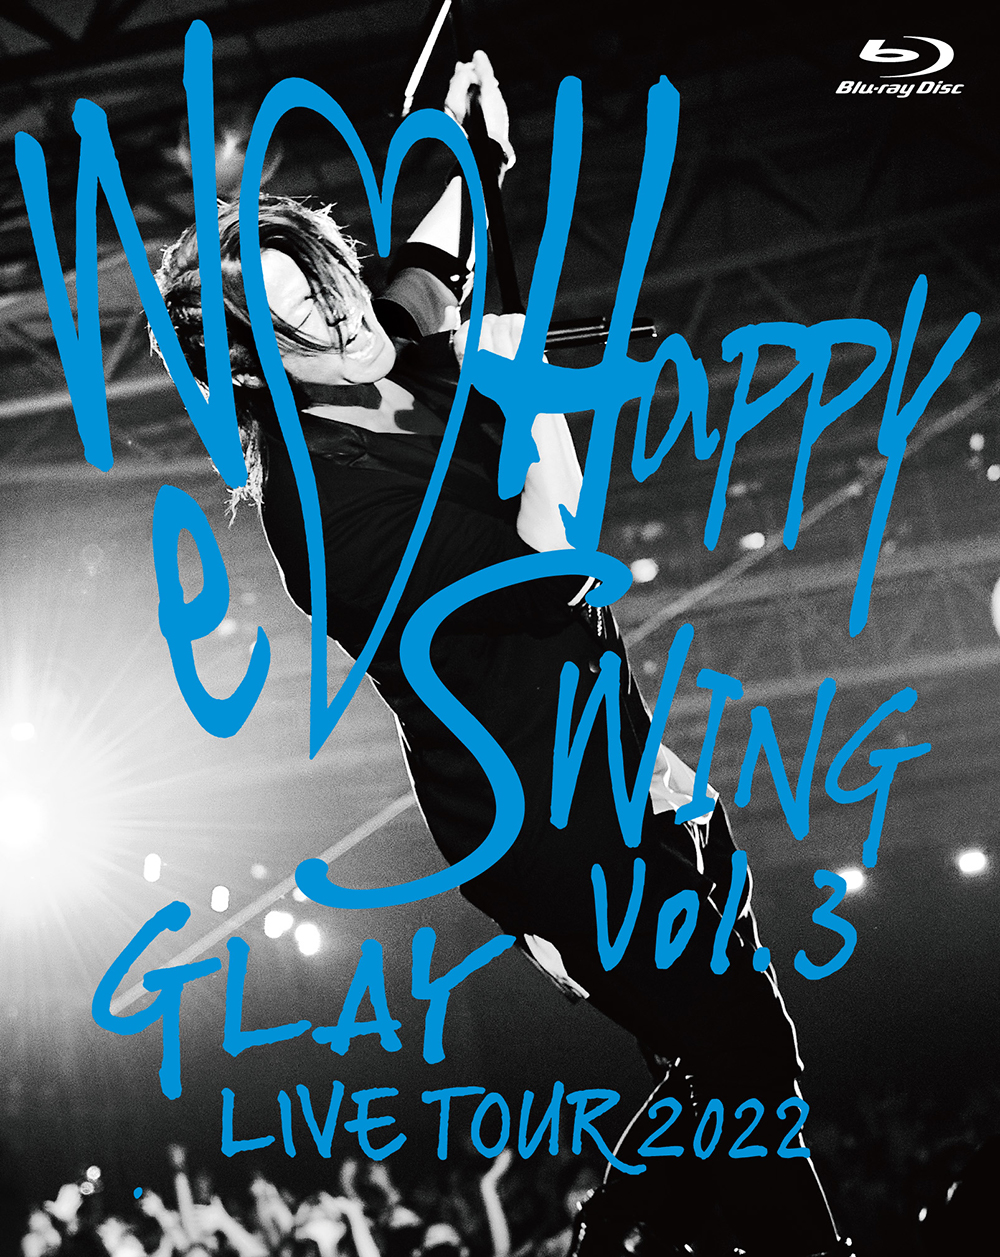 LIVE Blu-ray＆DVD 『GLAY LIVE TOUR 2022 ～We♡Happy Swing～ Vol.3 